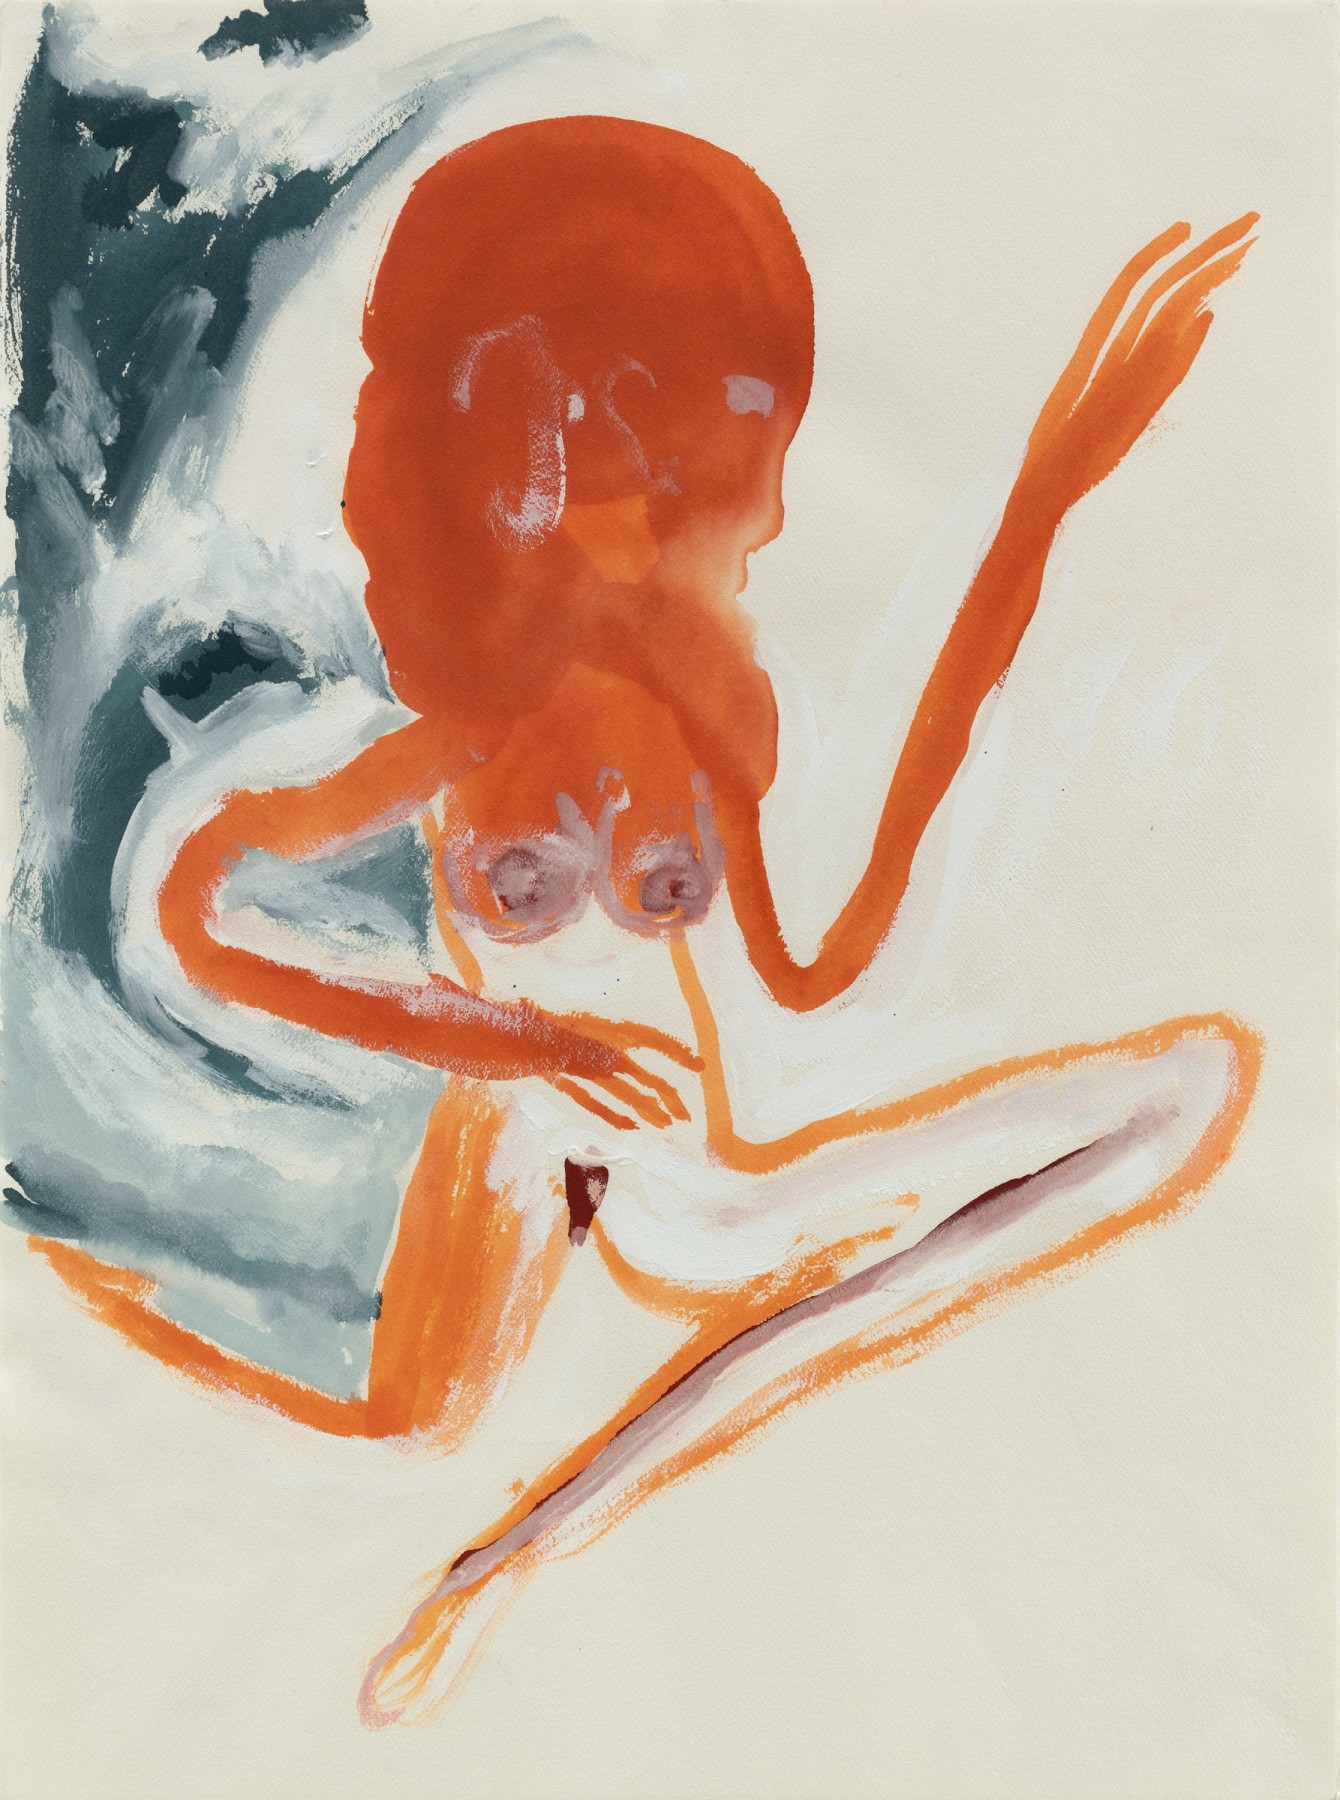 Don Van Viet, Untitled (Woman), 1986